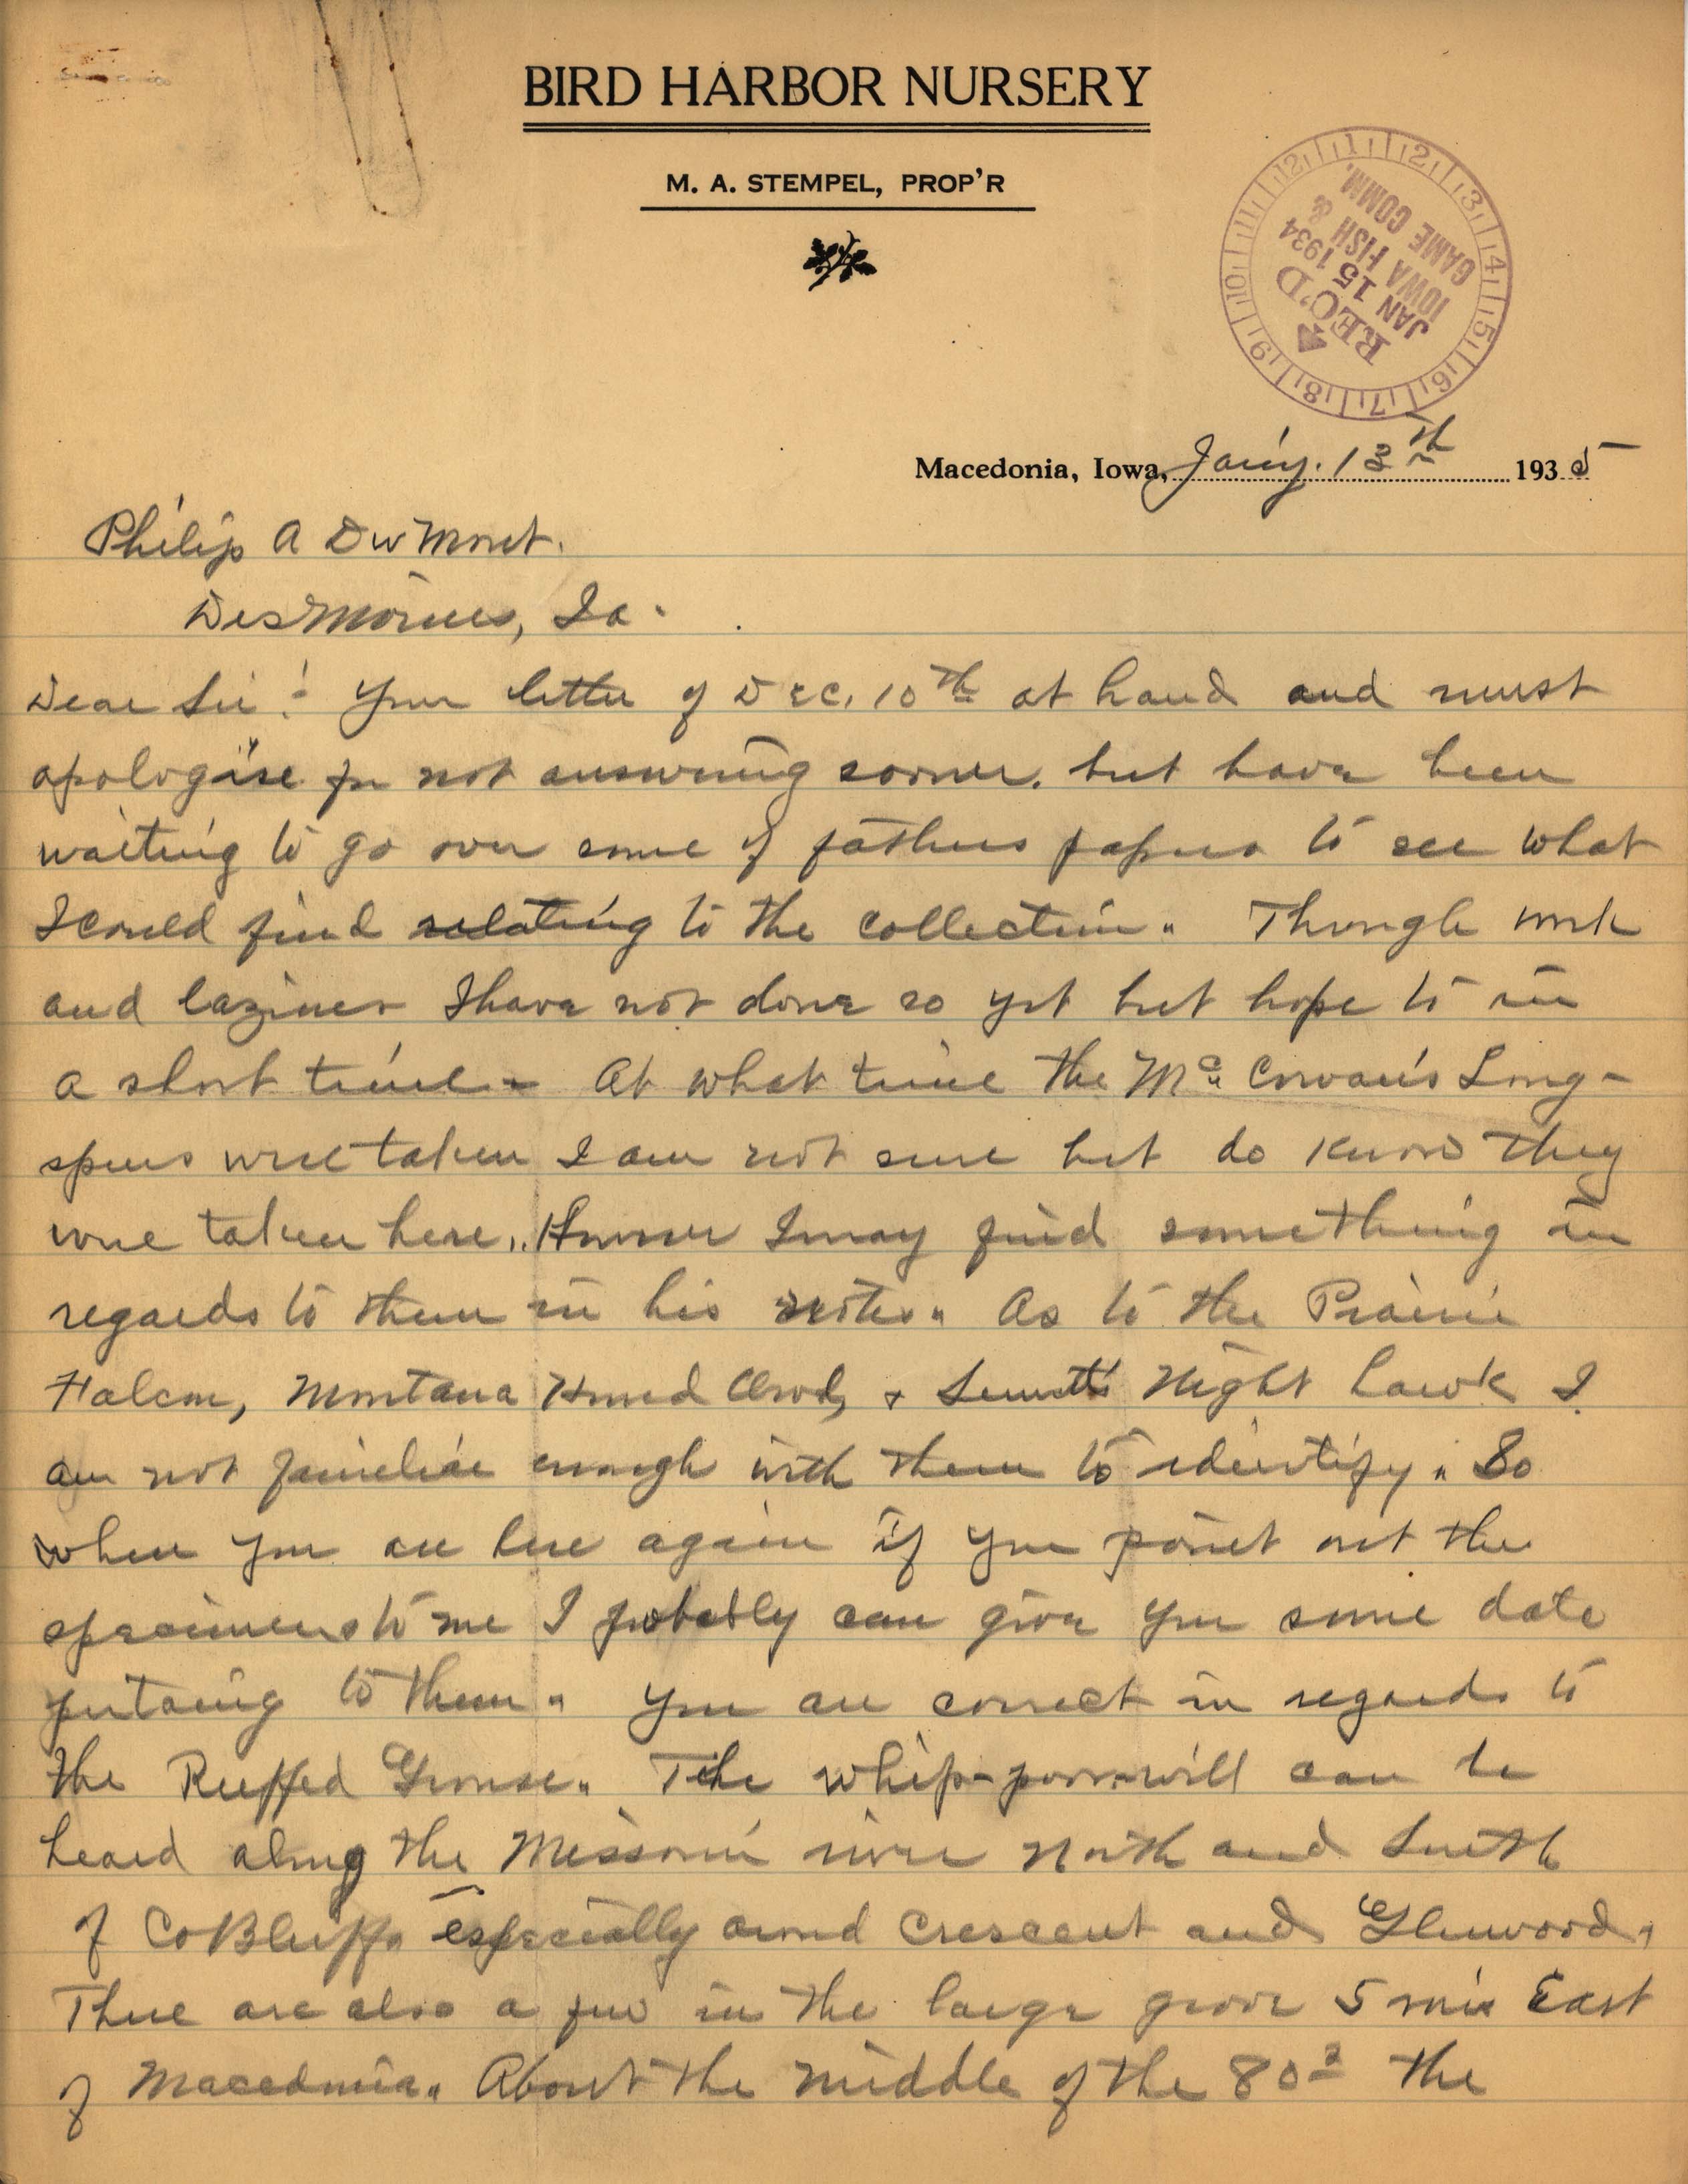 Max Stempel letter to Philip DuMont regarding details about bird specimens, January 13, 1935